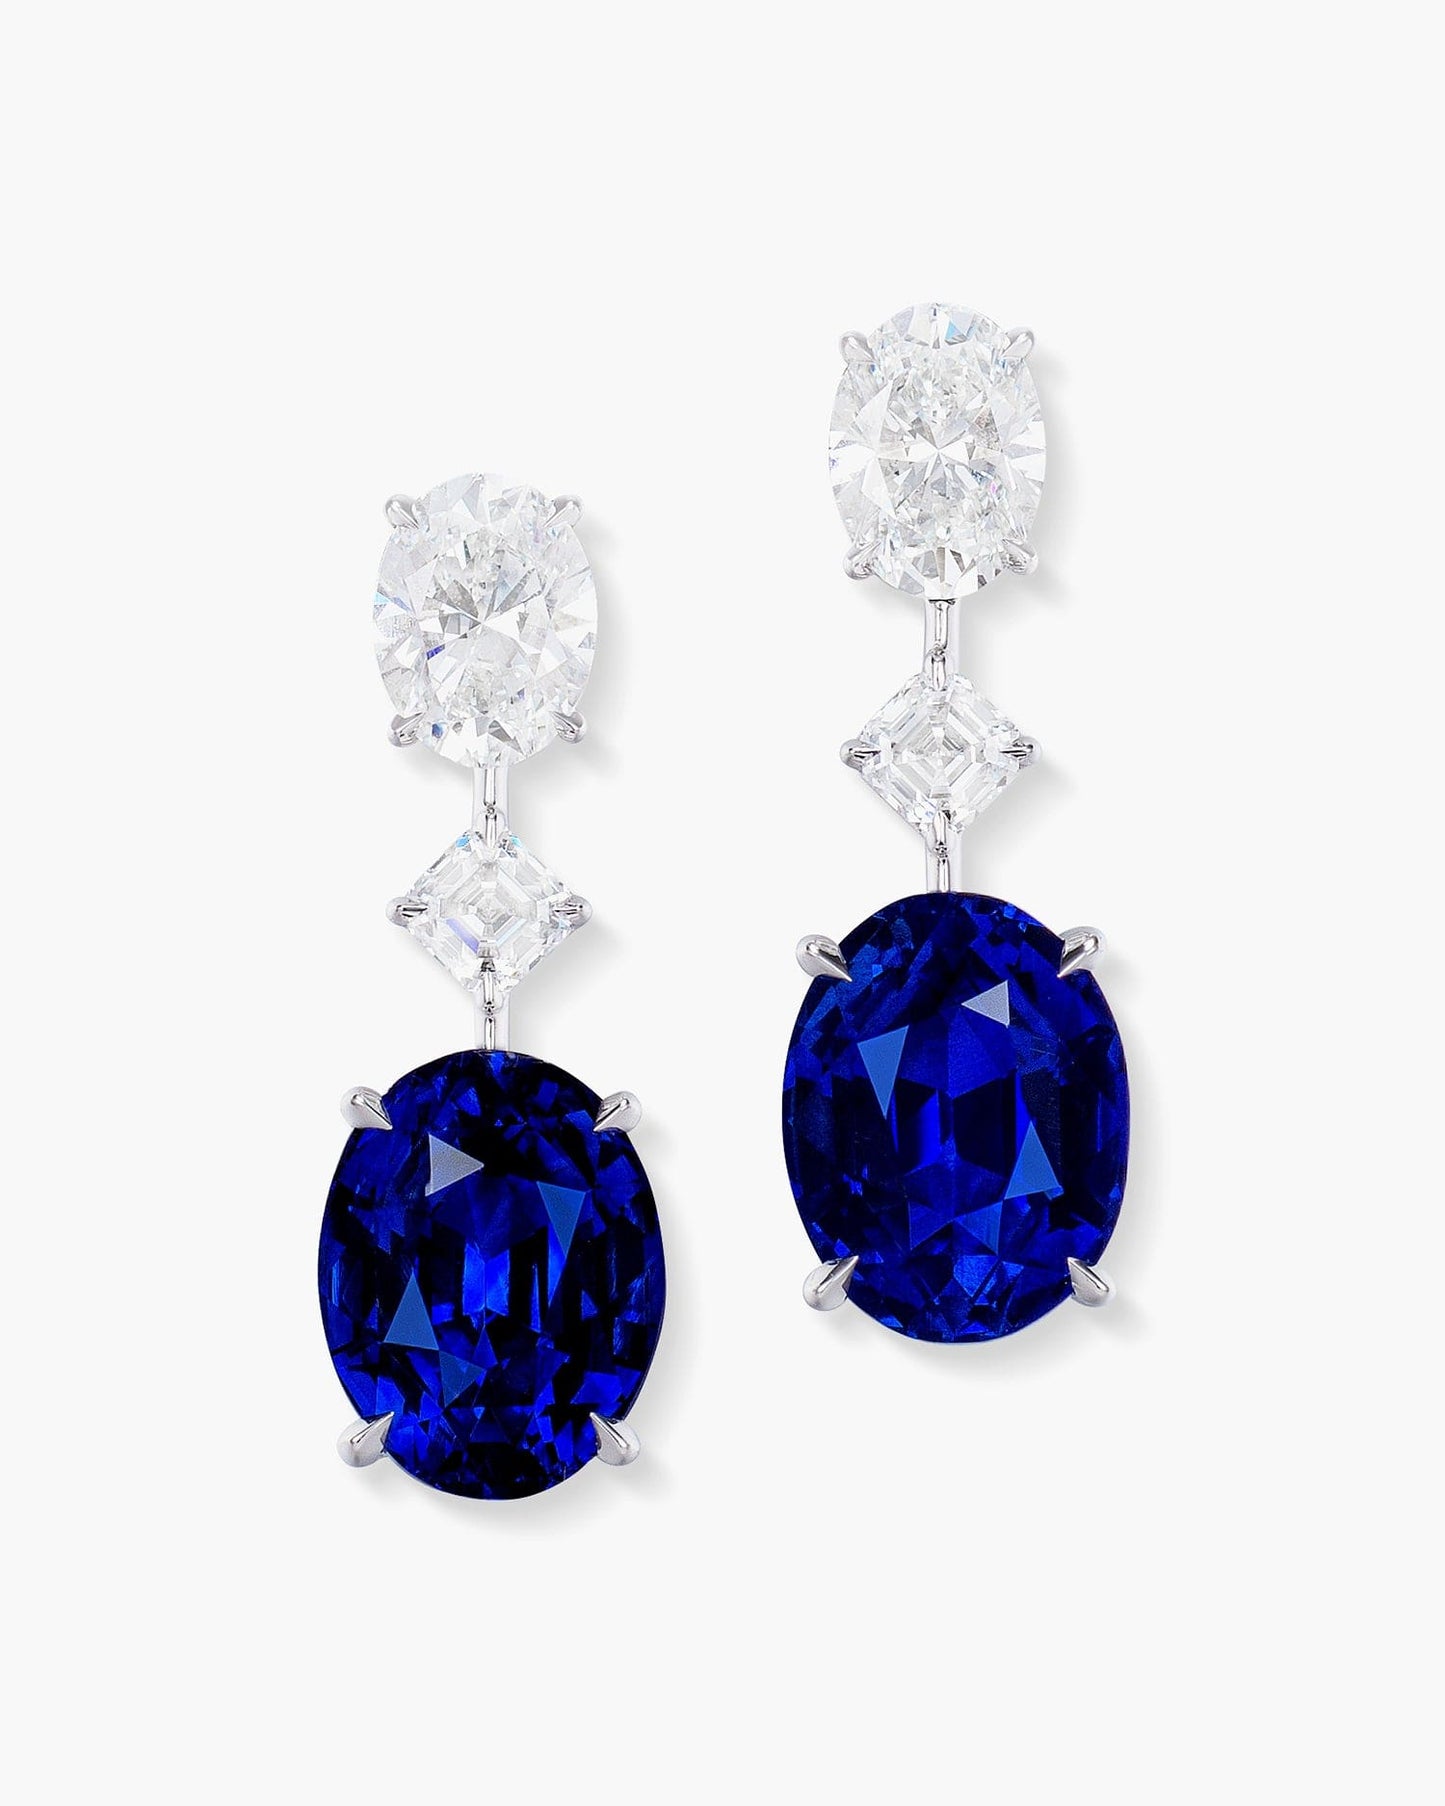 8.34 carat Oval Shape Ceylon Sapphire and Diamond Earrings